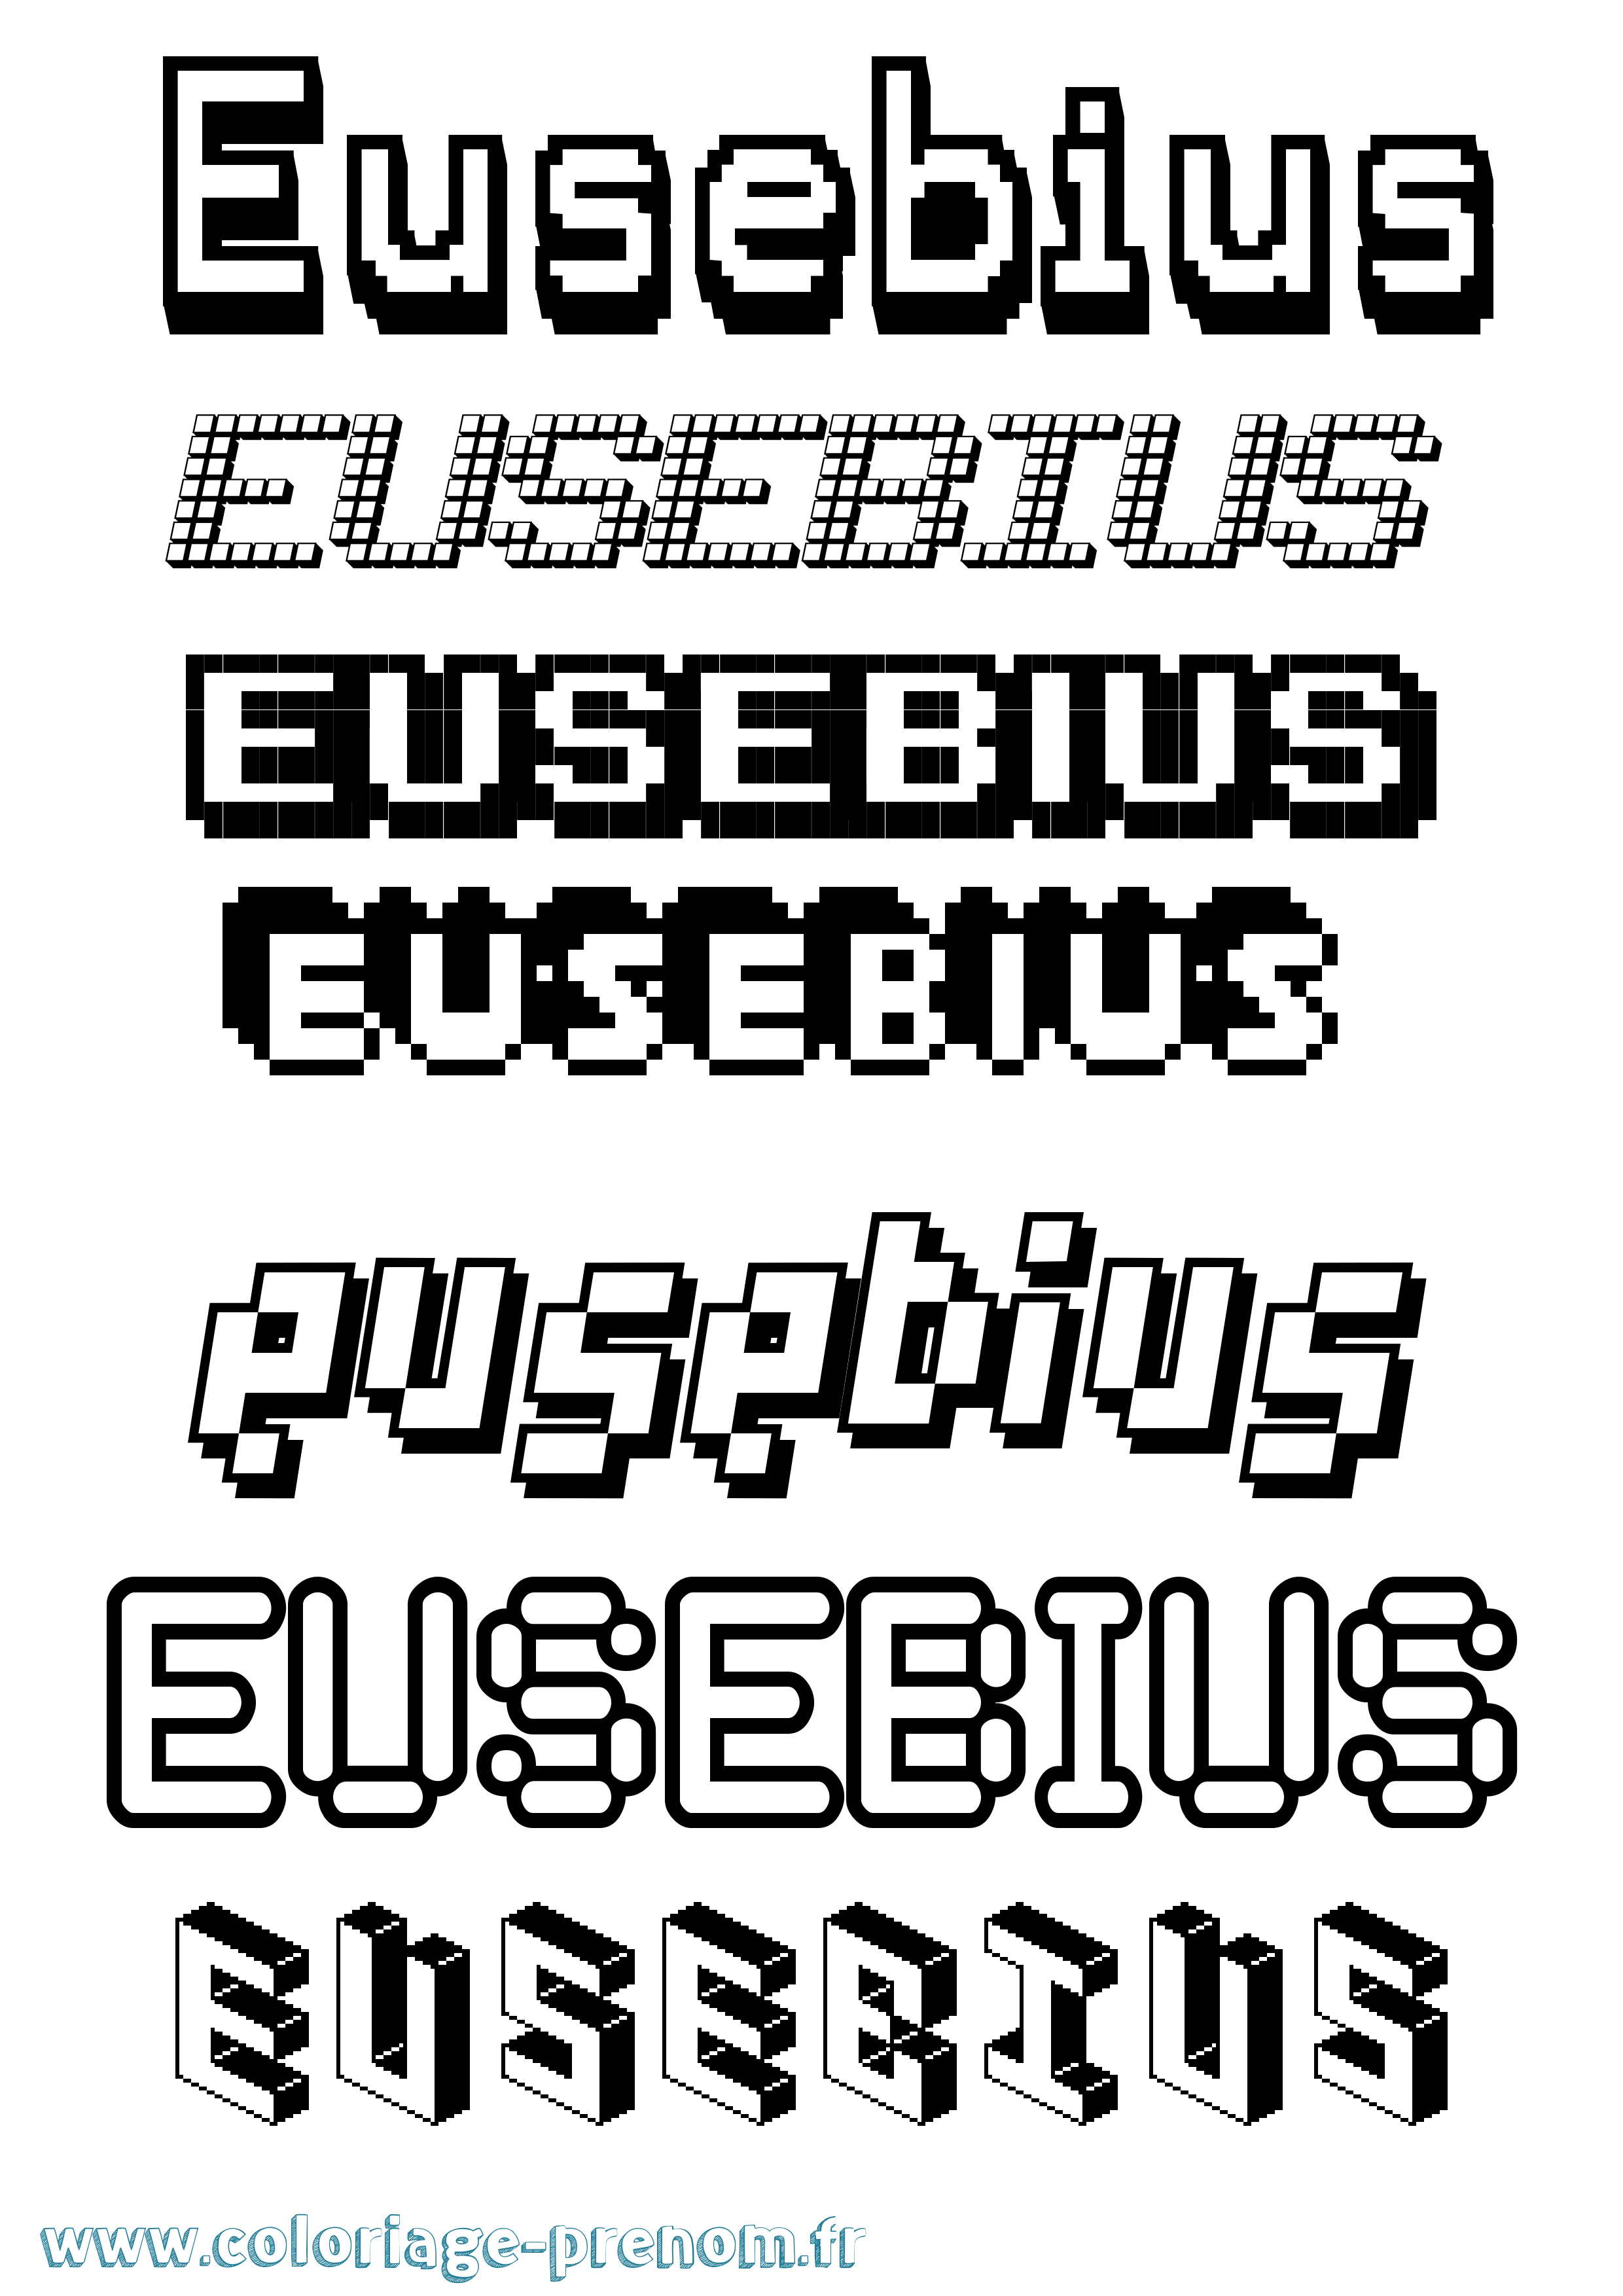 Coloriage prénom Eusebius Pixel